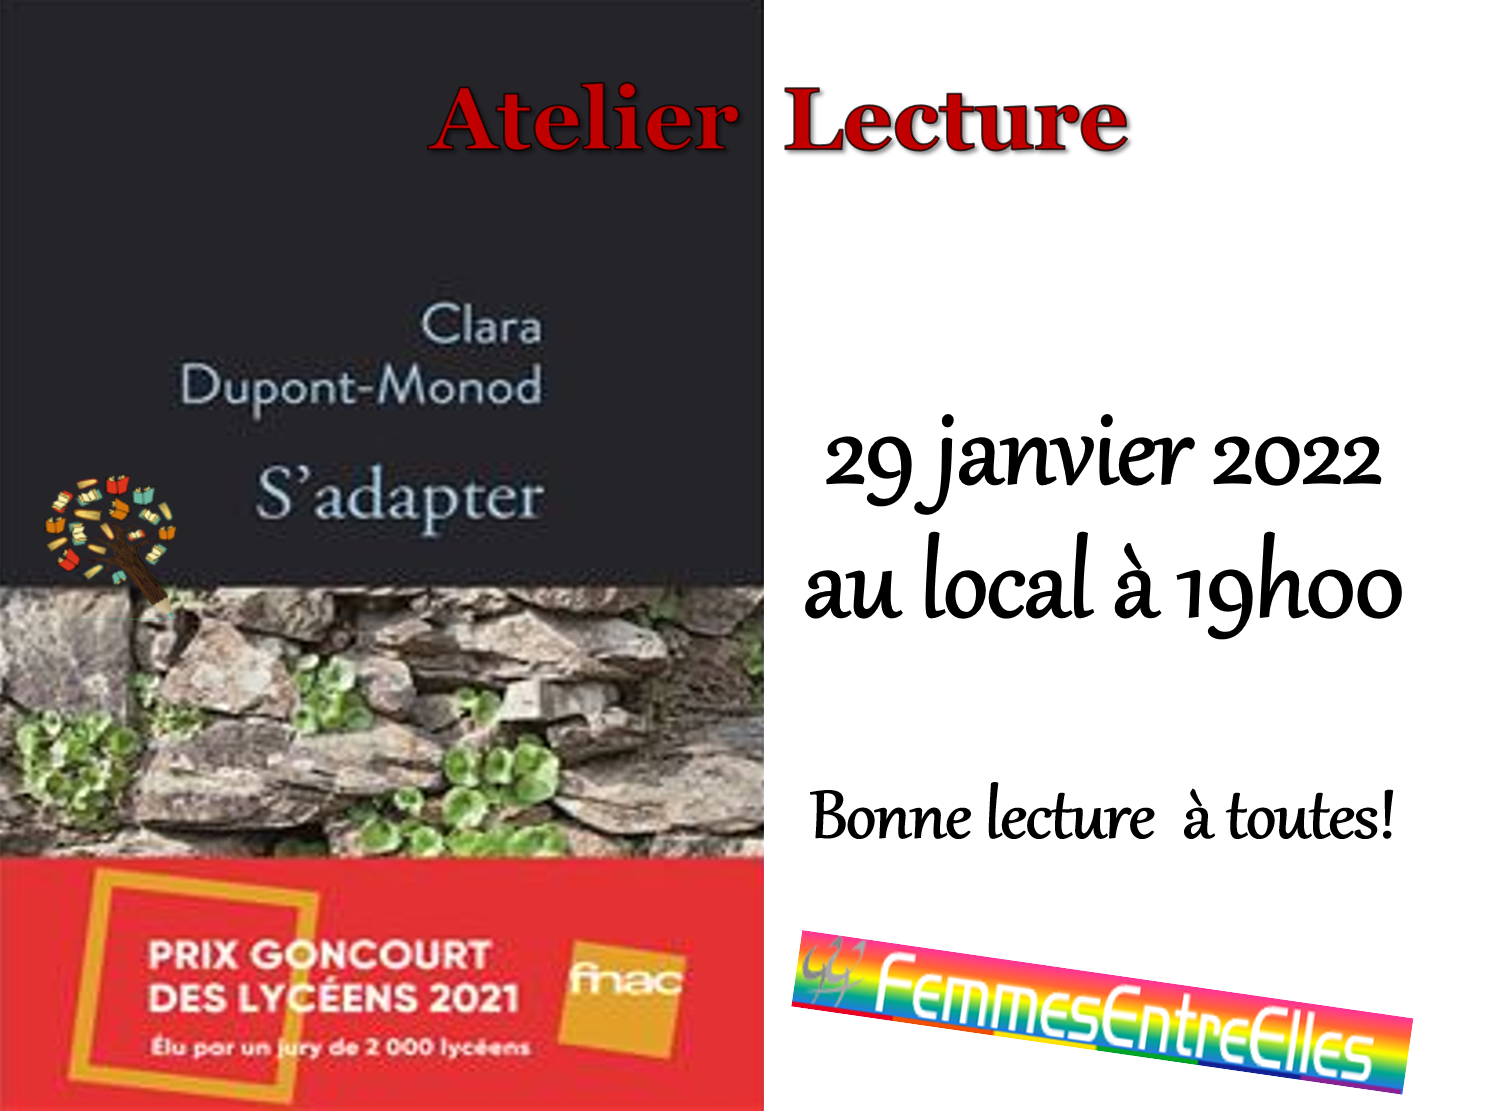 [FEE] Atelier lecture 29 janvier 2022, 19h au local avec "s'adapter", Clara Dupont-Monod